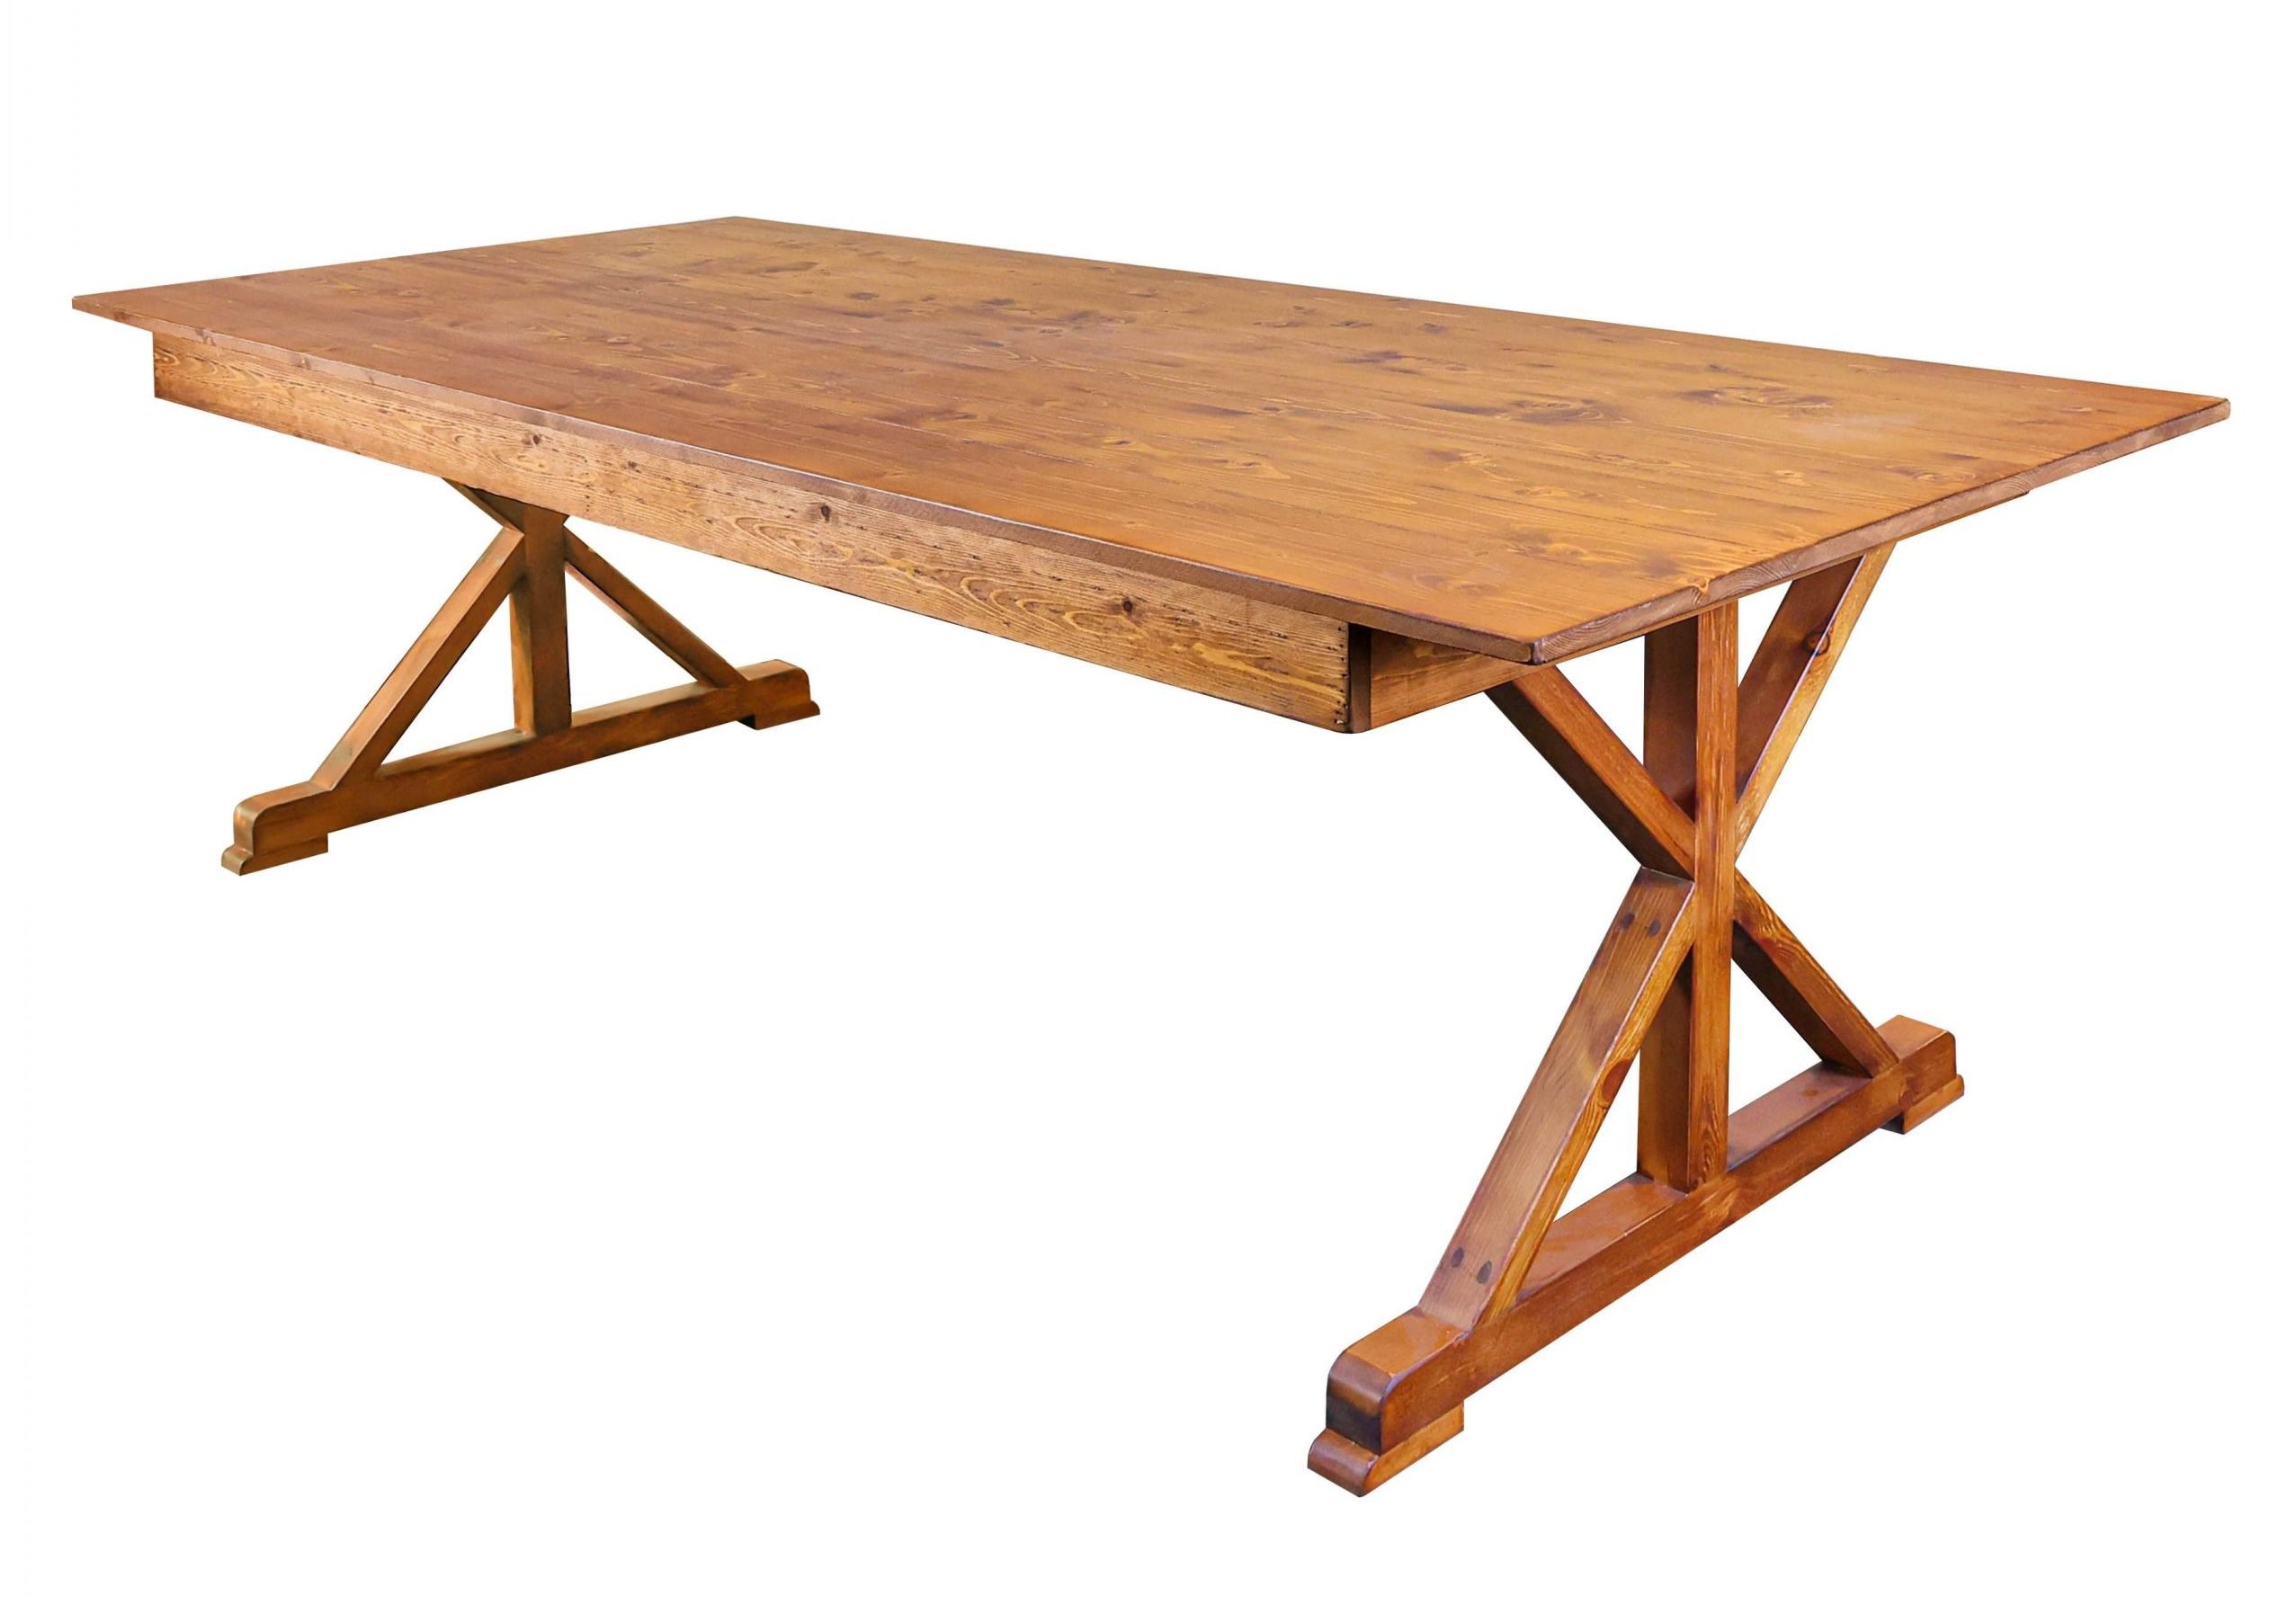 Table Farm Table Rectangle 96x40 X Shape Leg Color Chestnut A Series TFARMRT9640 CHESTNUT X LEG AX T Right